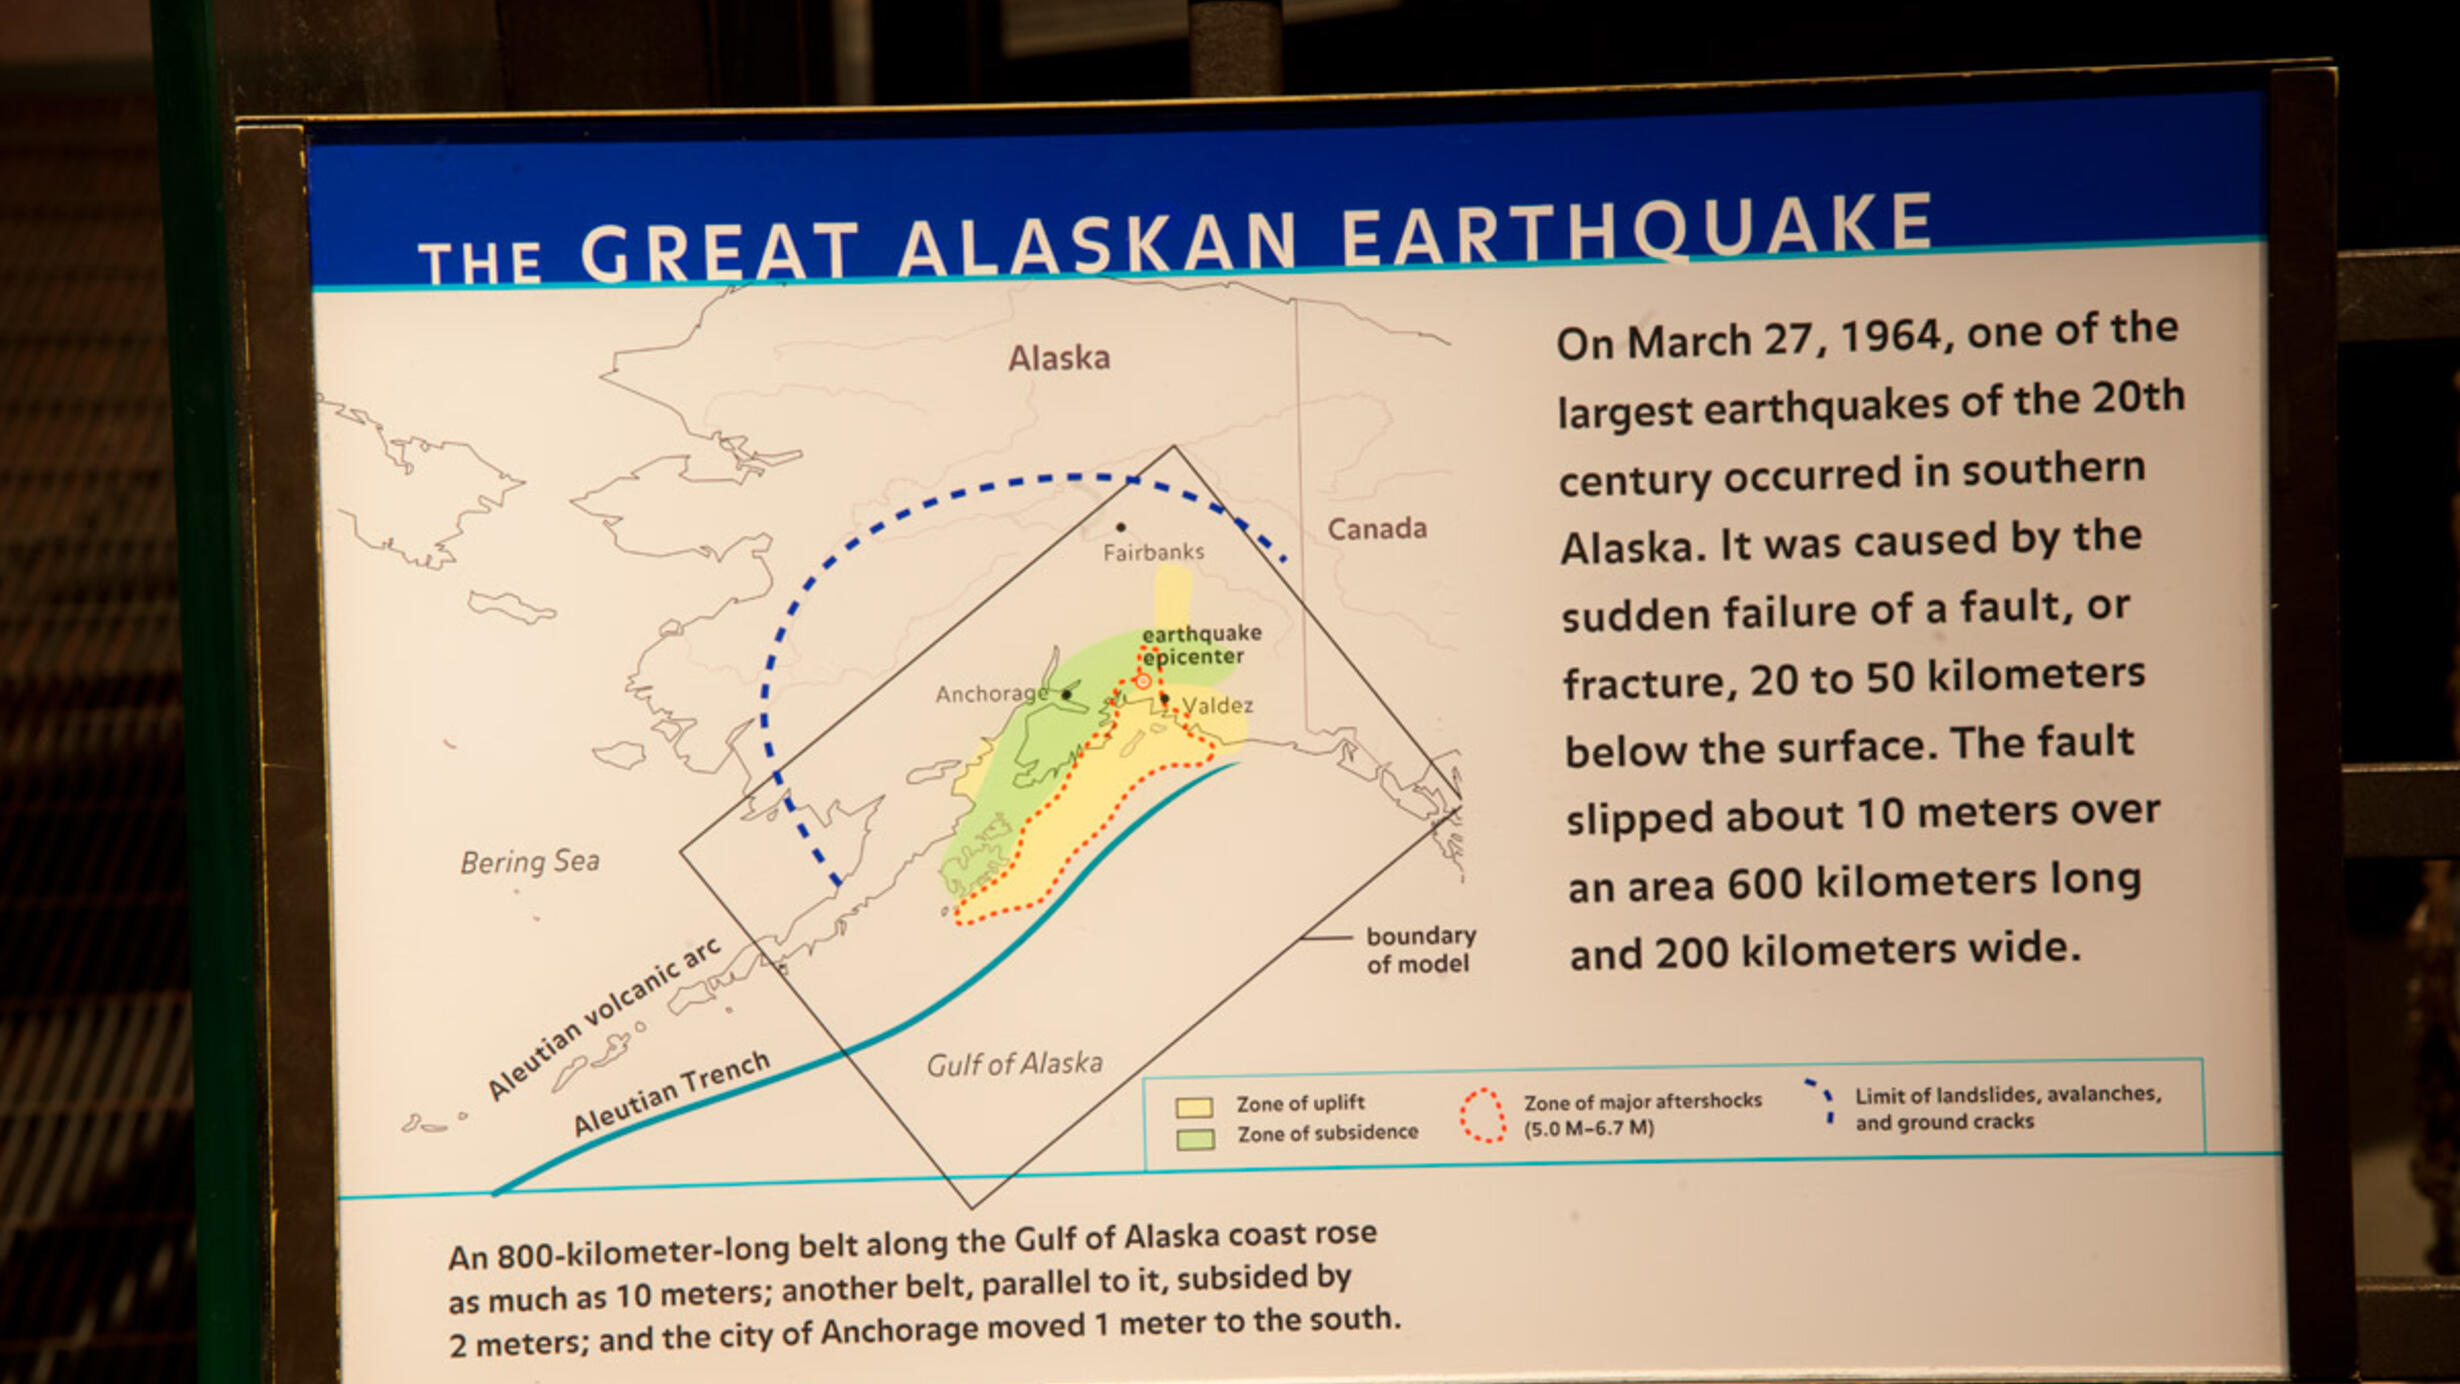 The Great Alaskan Earthquake